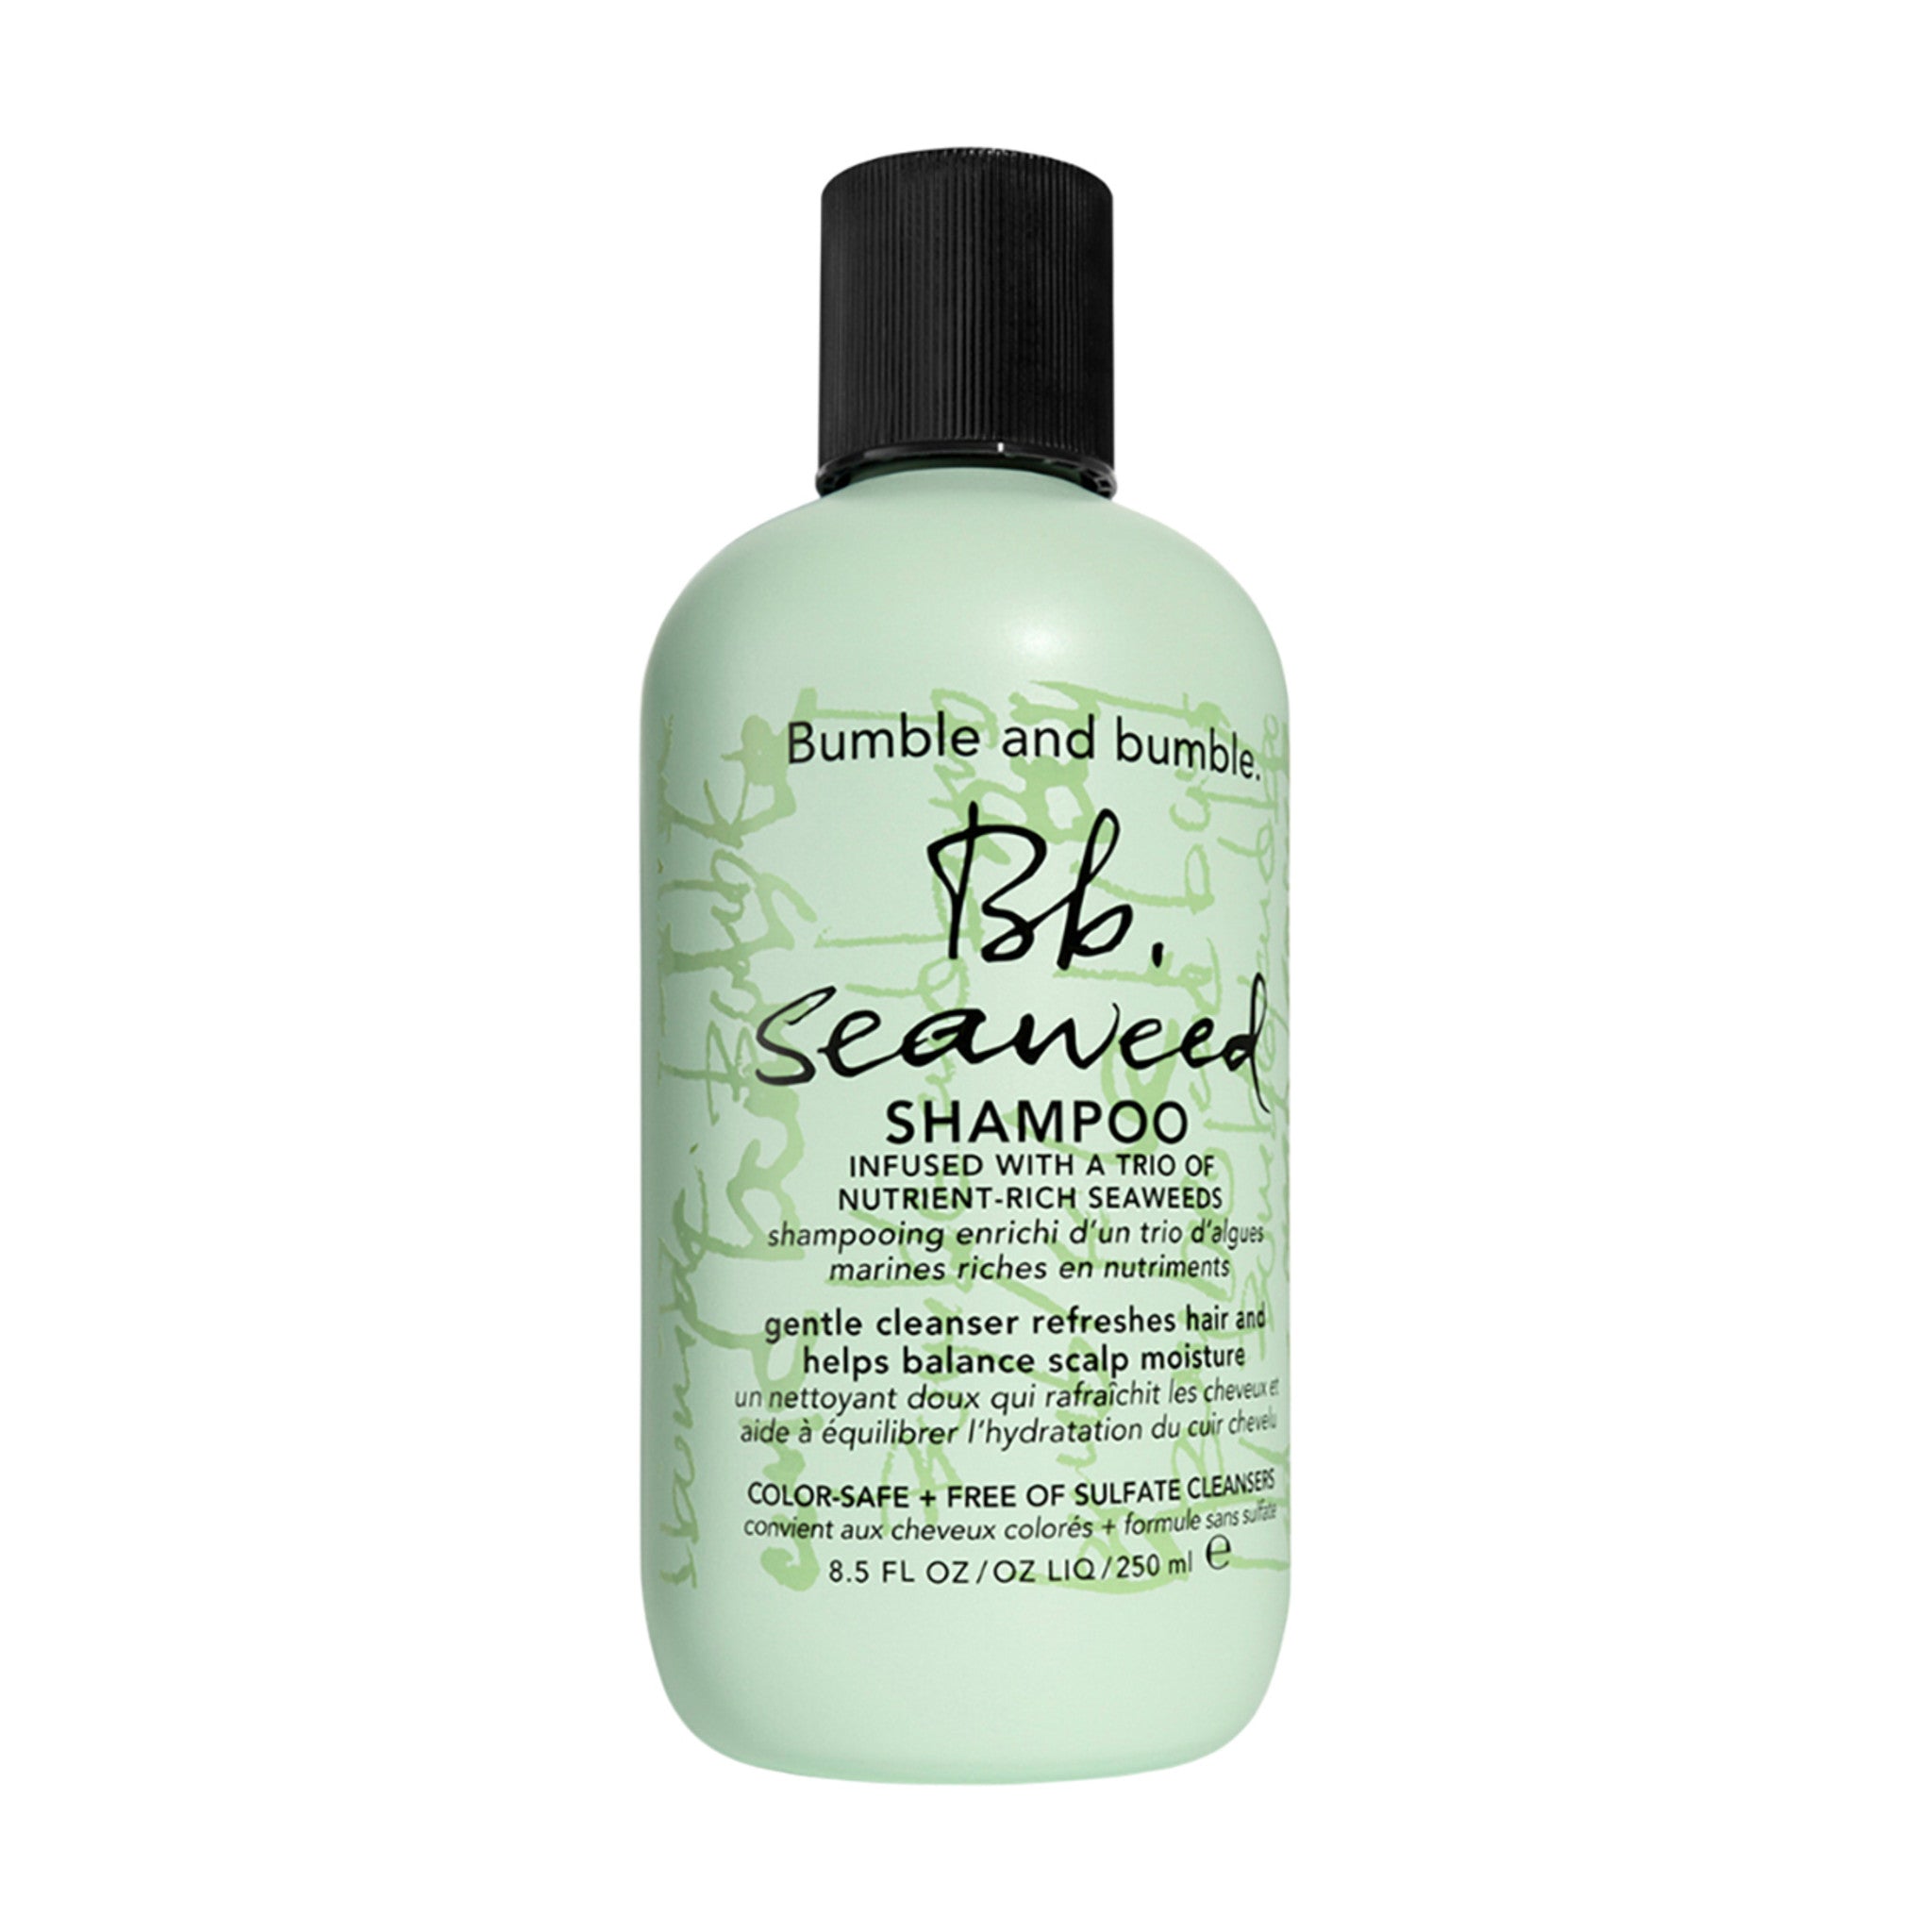 Bumble and Bumble Seaweed Shampoo Size variant: 8.5 fl oz main image.